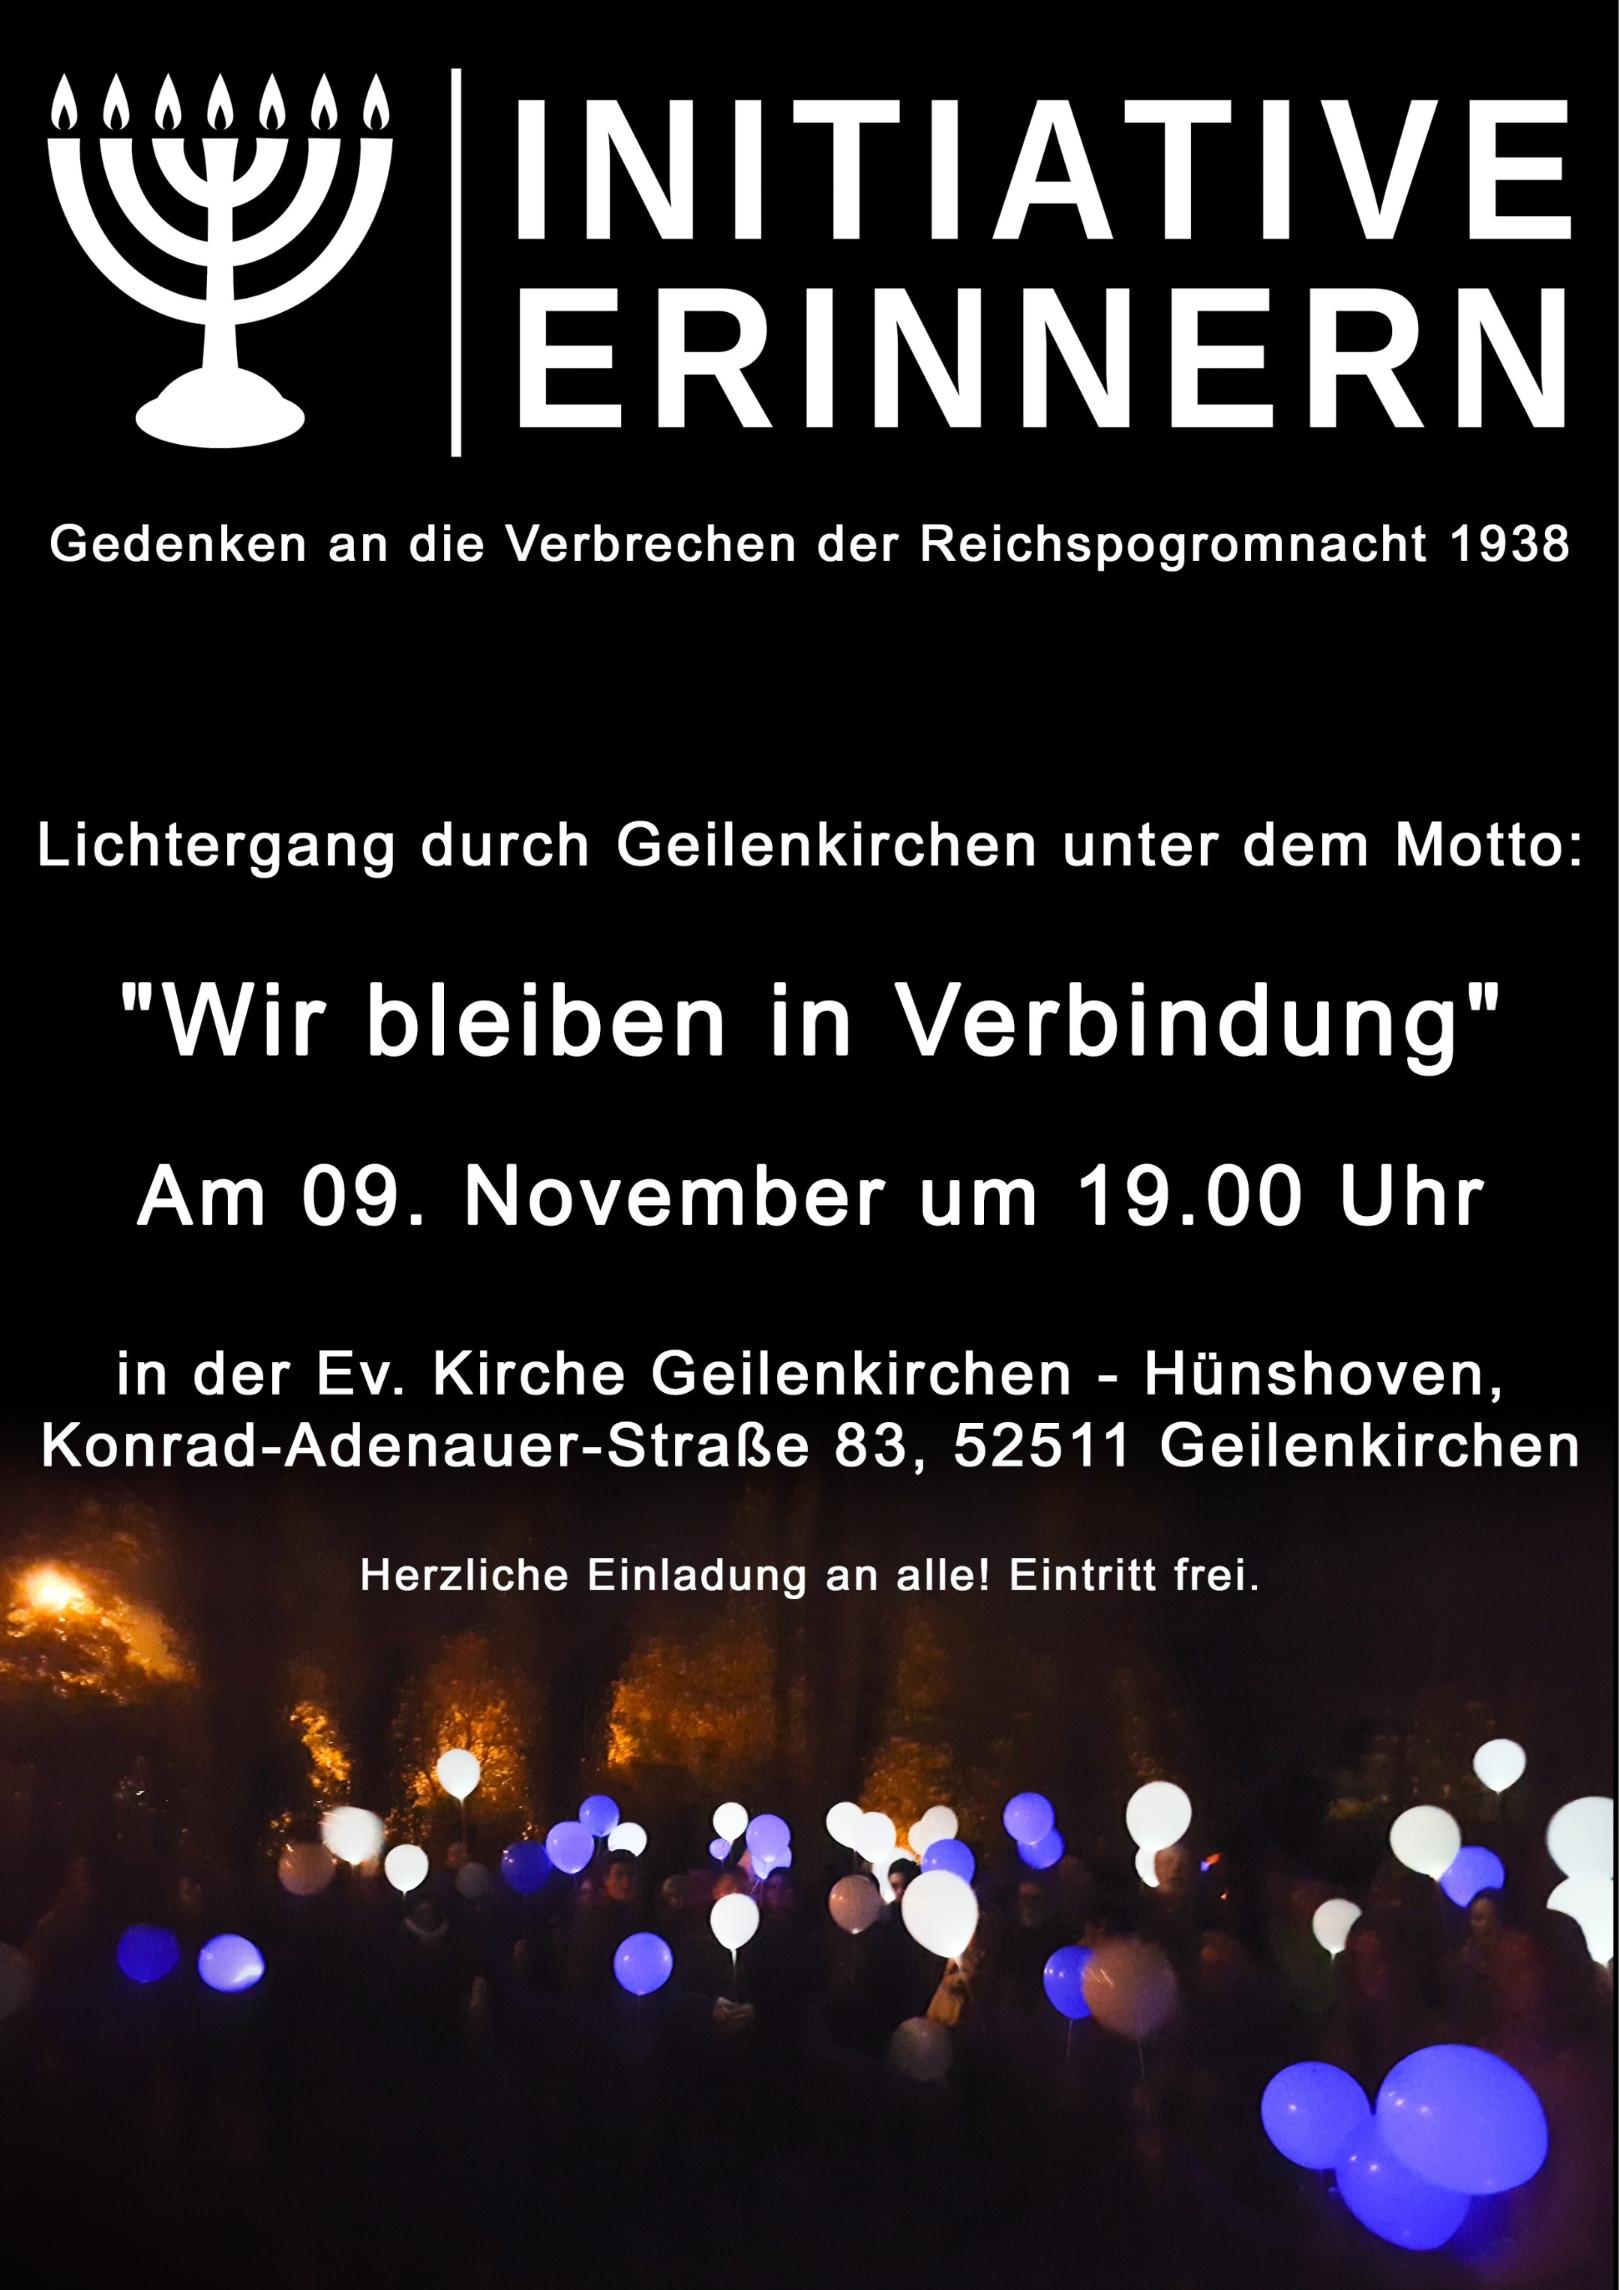 Lichtergang am 09. November (c) Initiative Erinnern